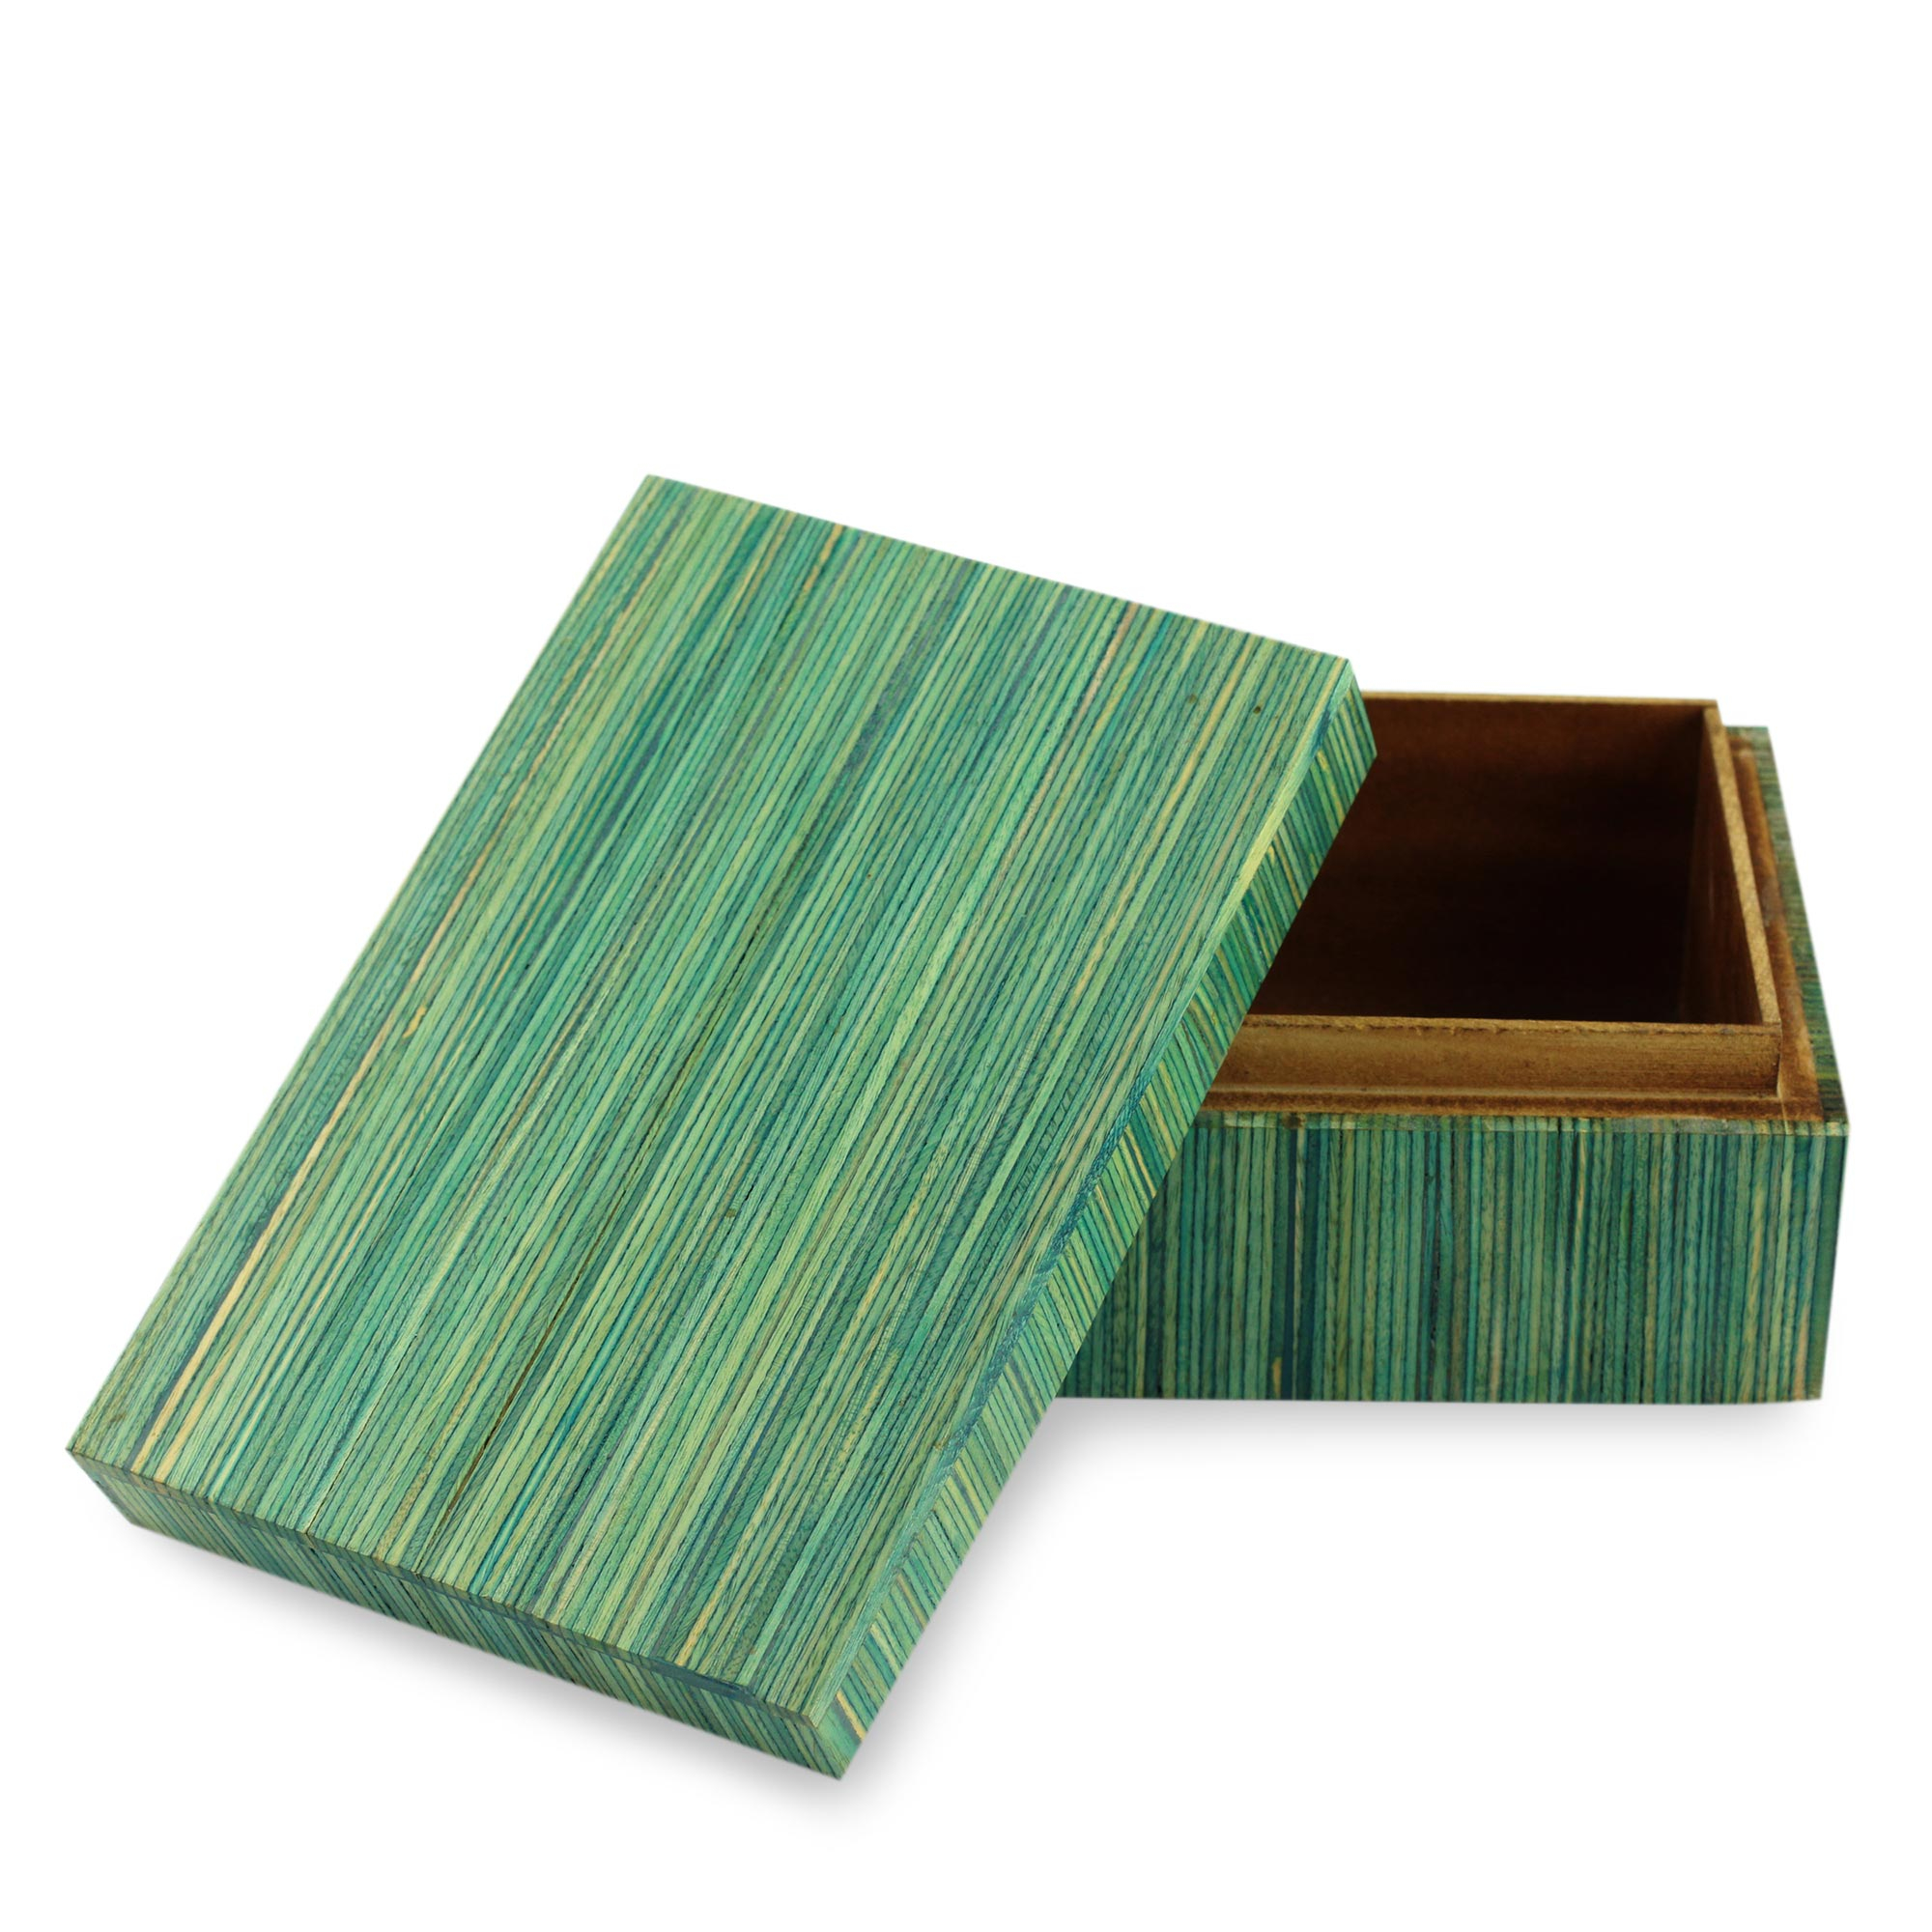 Handcrafted Wood Decorative Box from India - Fresh Delhi | NOVICA